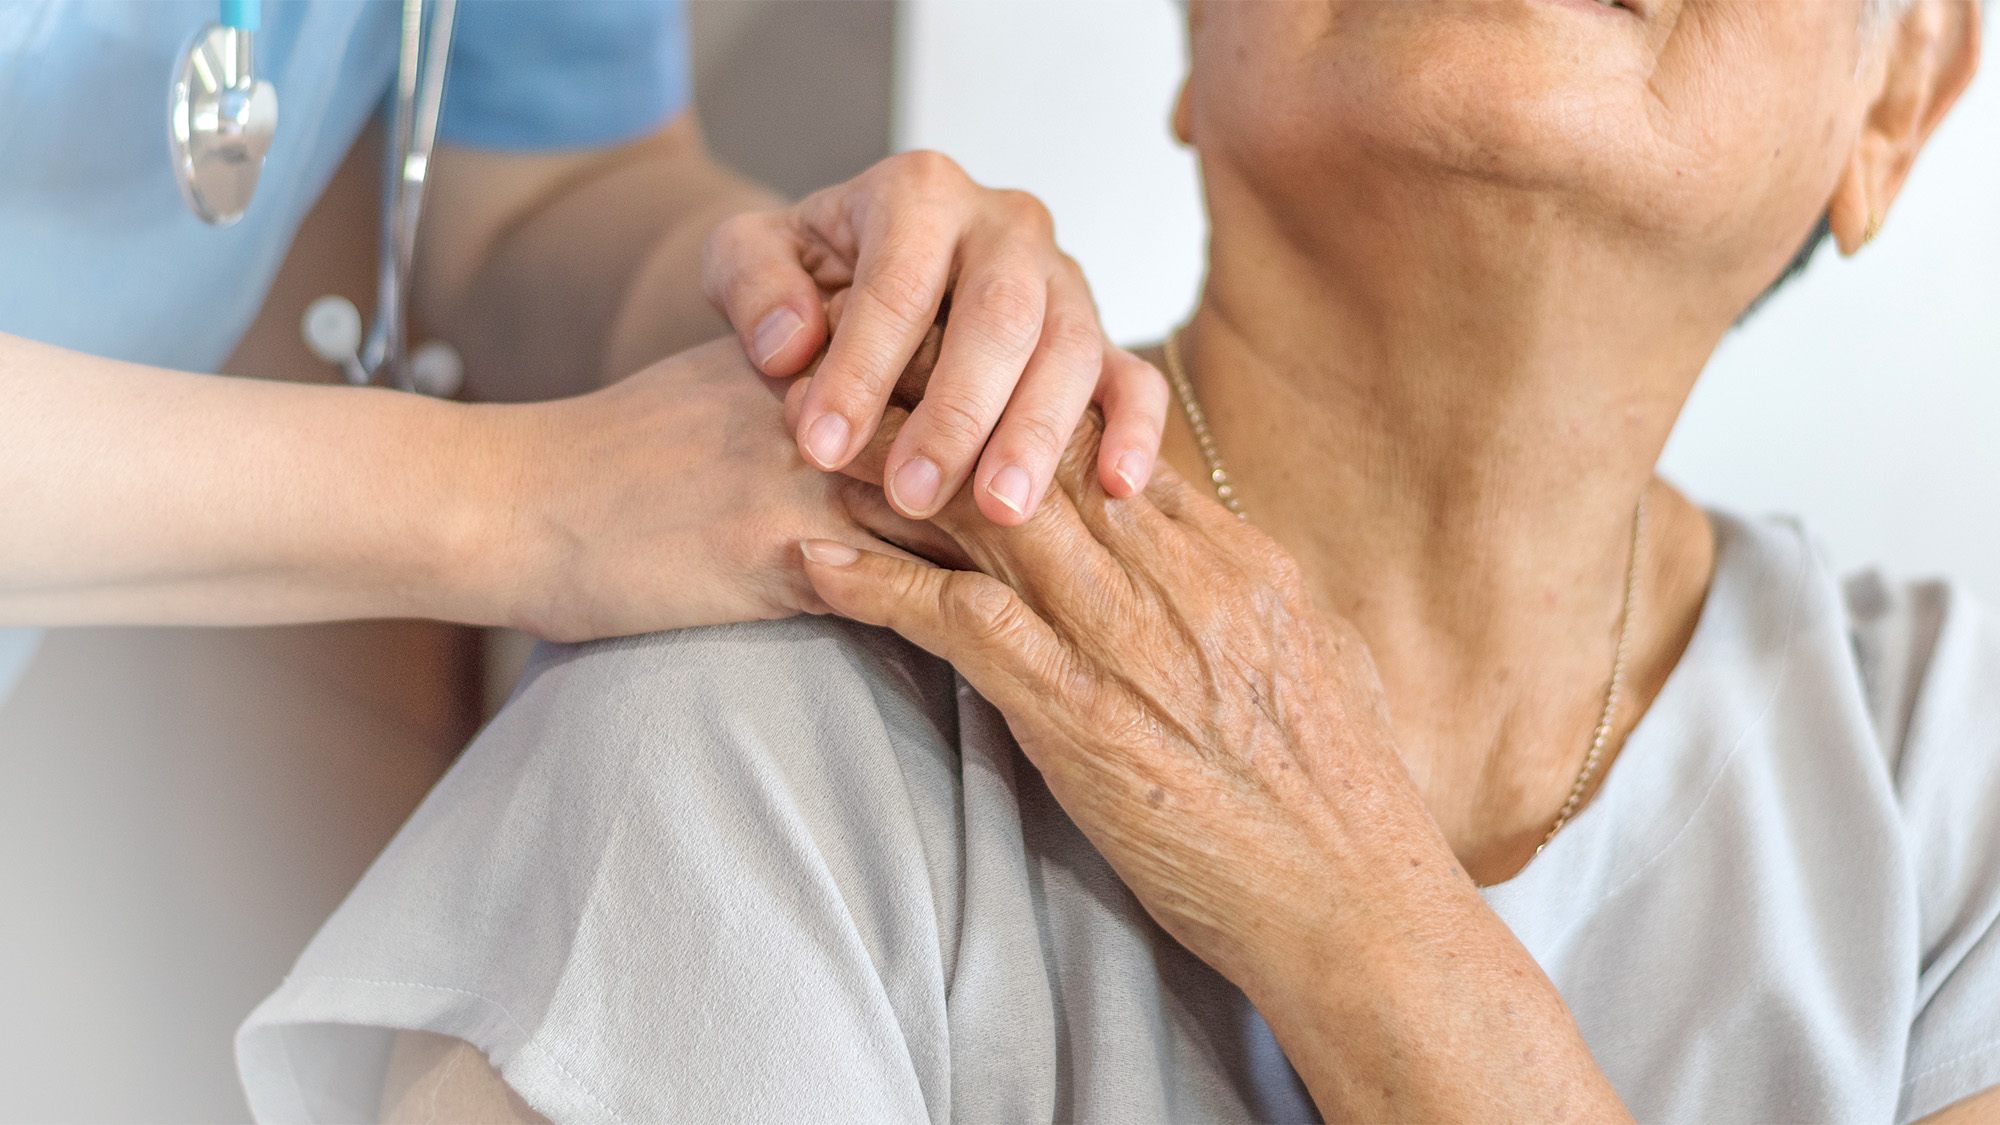 A caregiver comforts a patient